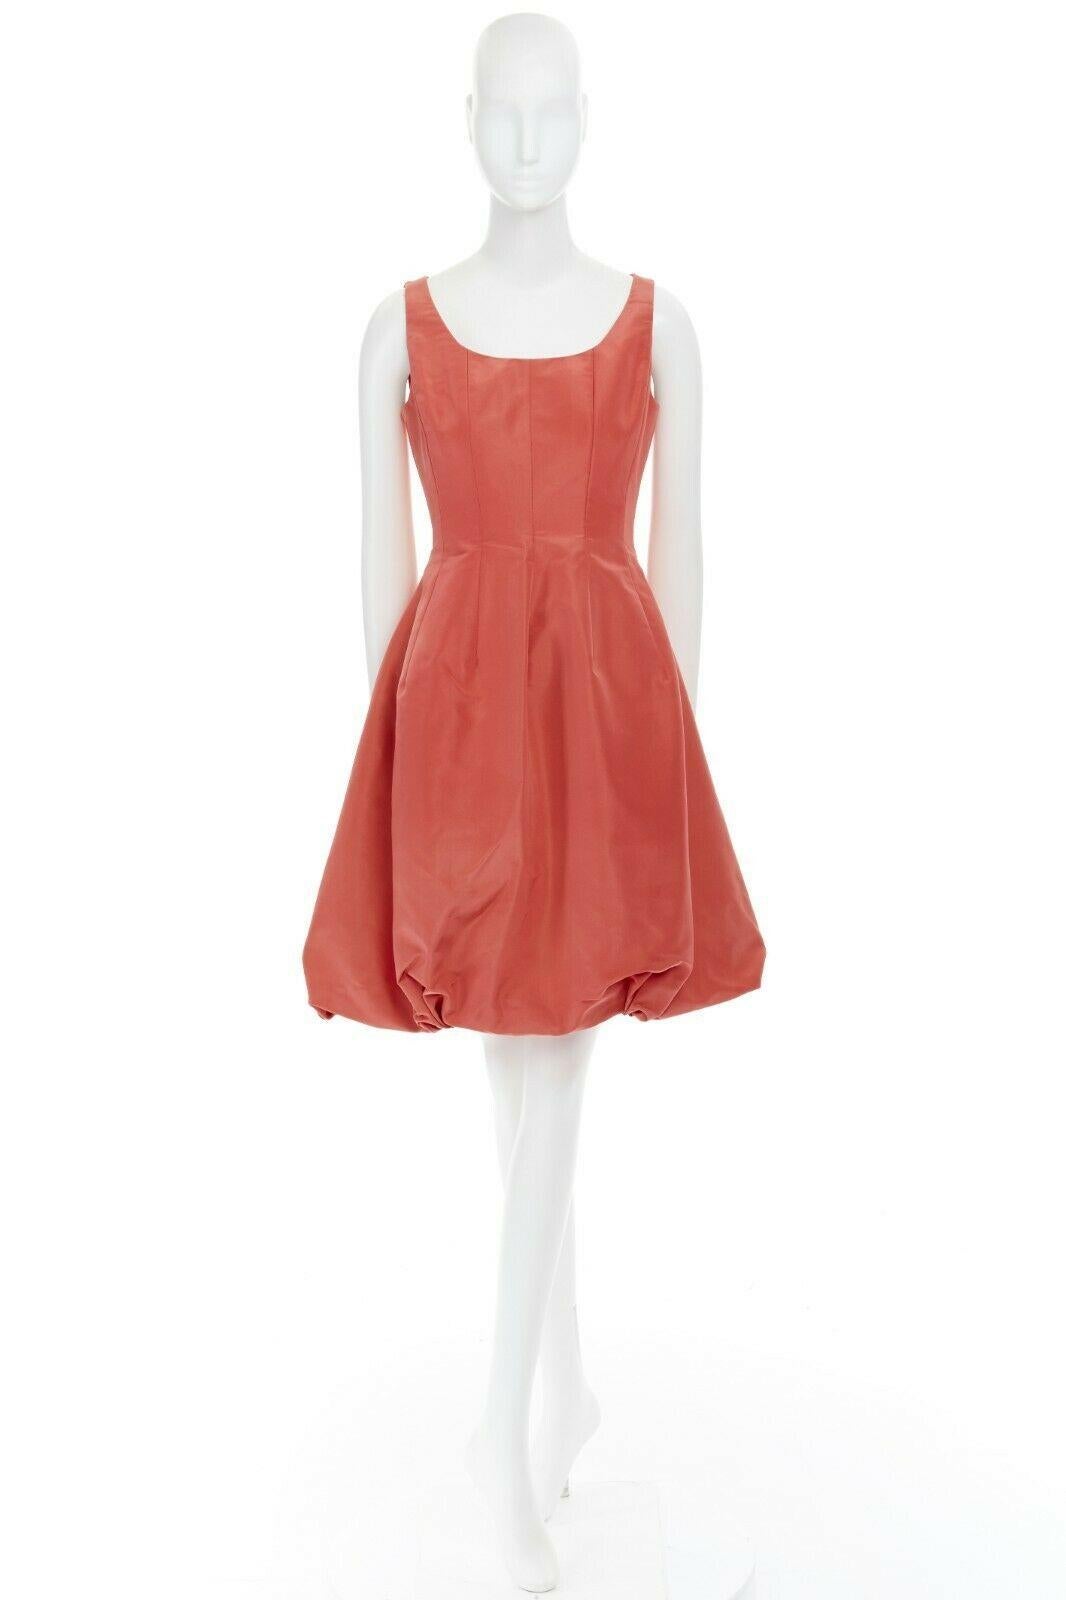 Orange new OSCAR DE LA RENTA R12 coral pink 100% silk bubble skirt cocktail dress US4